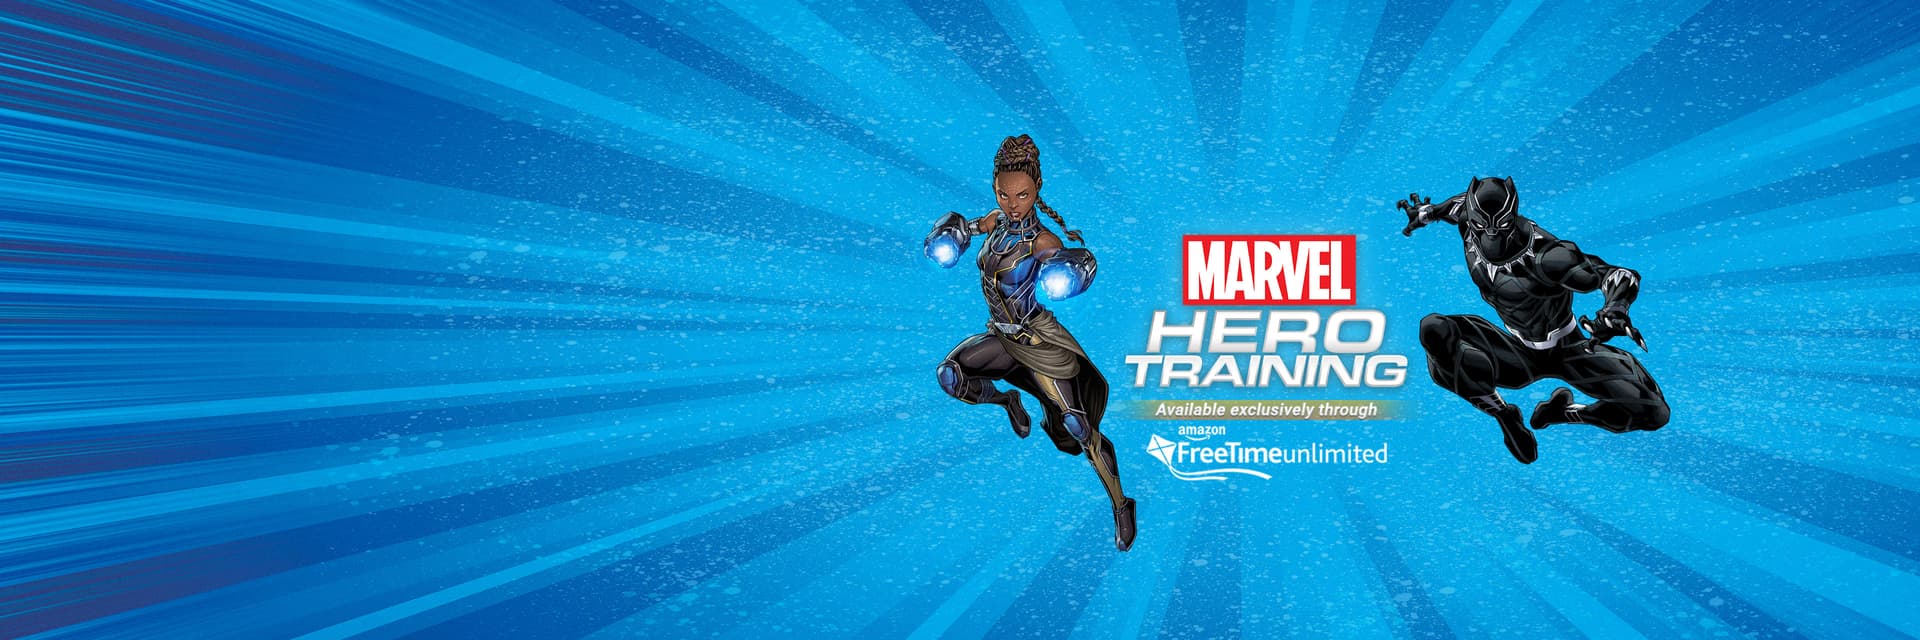 Amazon Echo Marvel Hero Training Skill